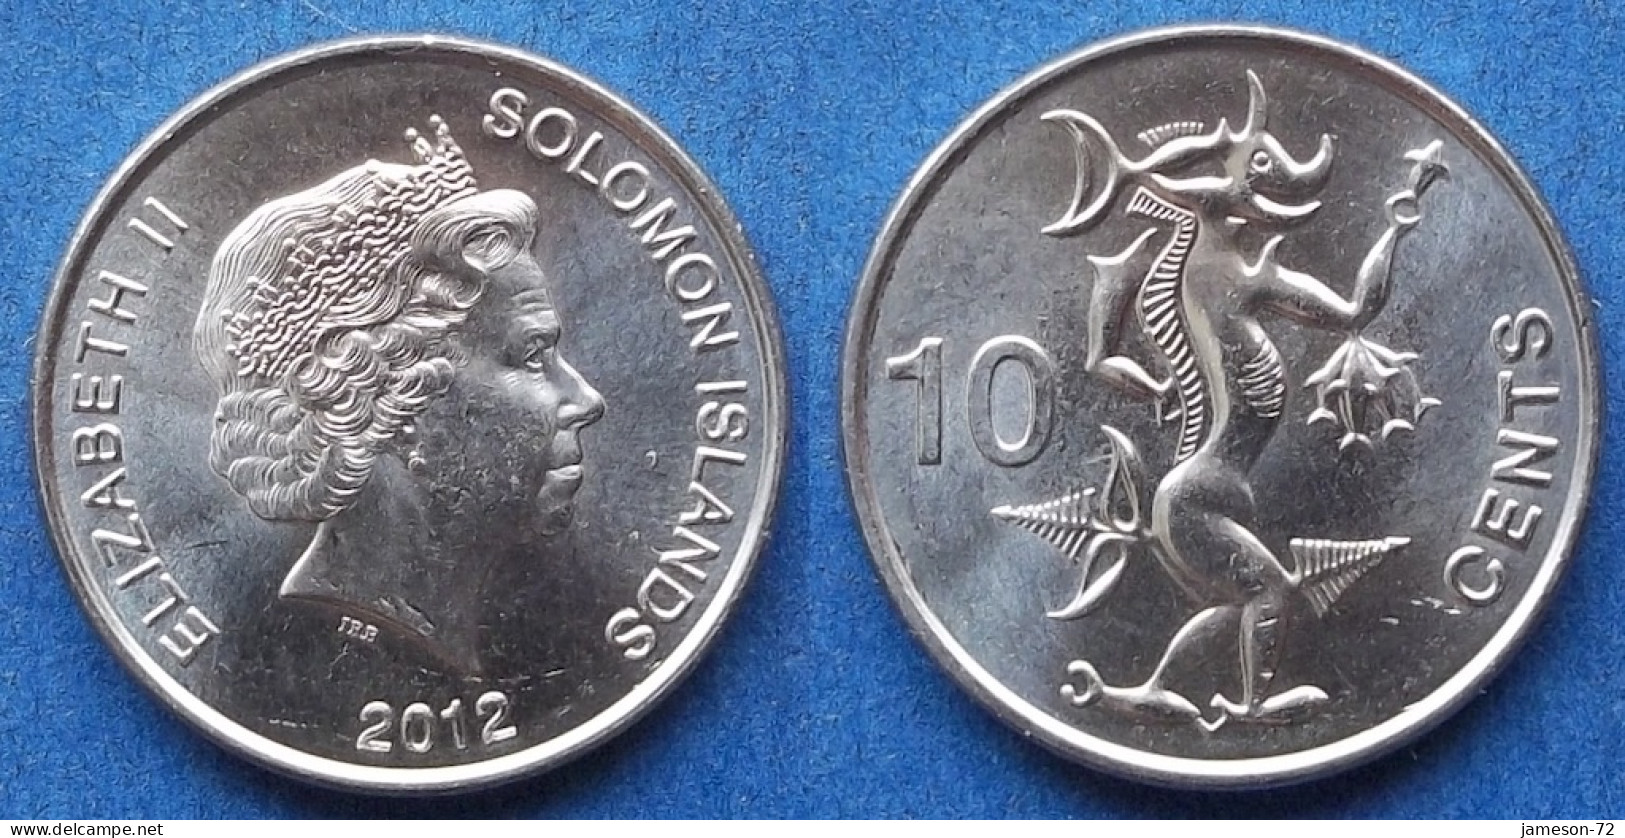 SOLOMON ISLANDS - 10 Censt 2012 "Sea Spirit Ngoreru" KM# 235 Commonwealth Nation, Elizabeth II - Edelweiss Coins - Solomoneilanden